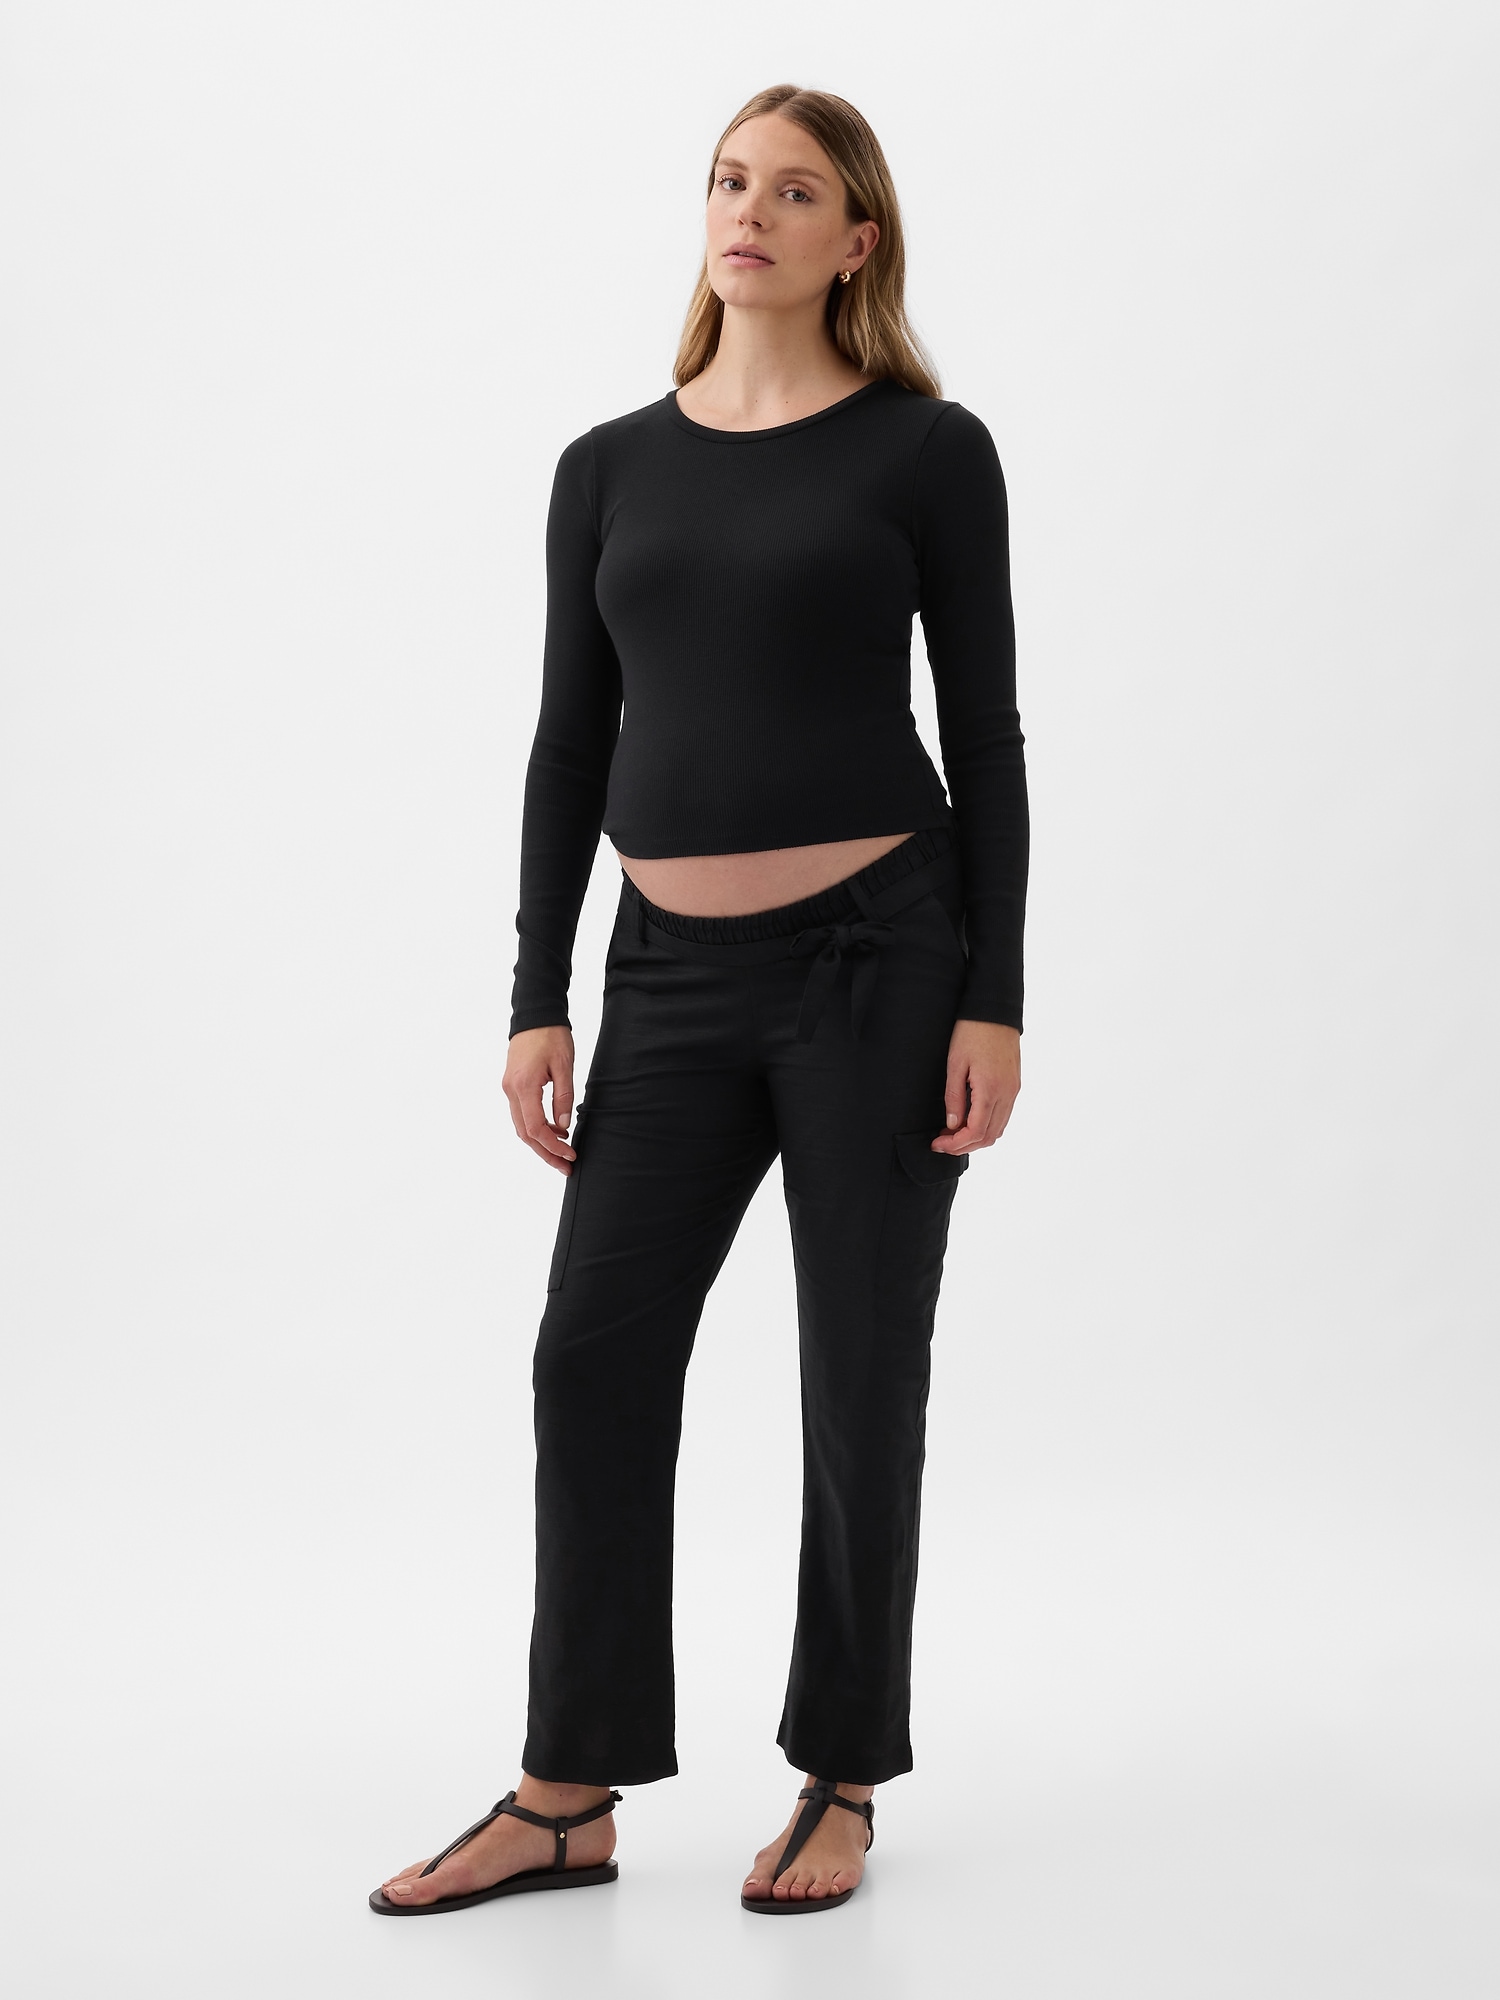 Black Gap Maternity Jeans Size 30/10 Long – Jill and Joey